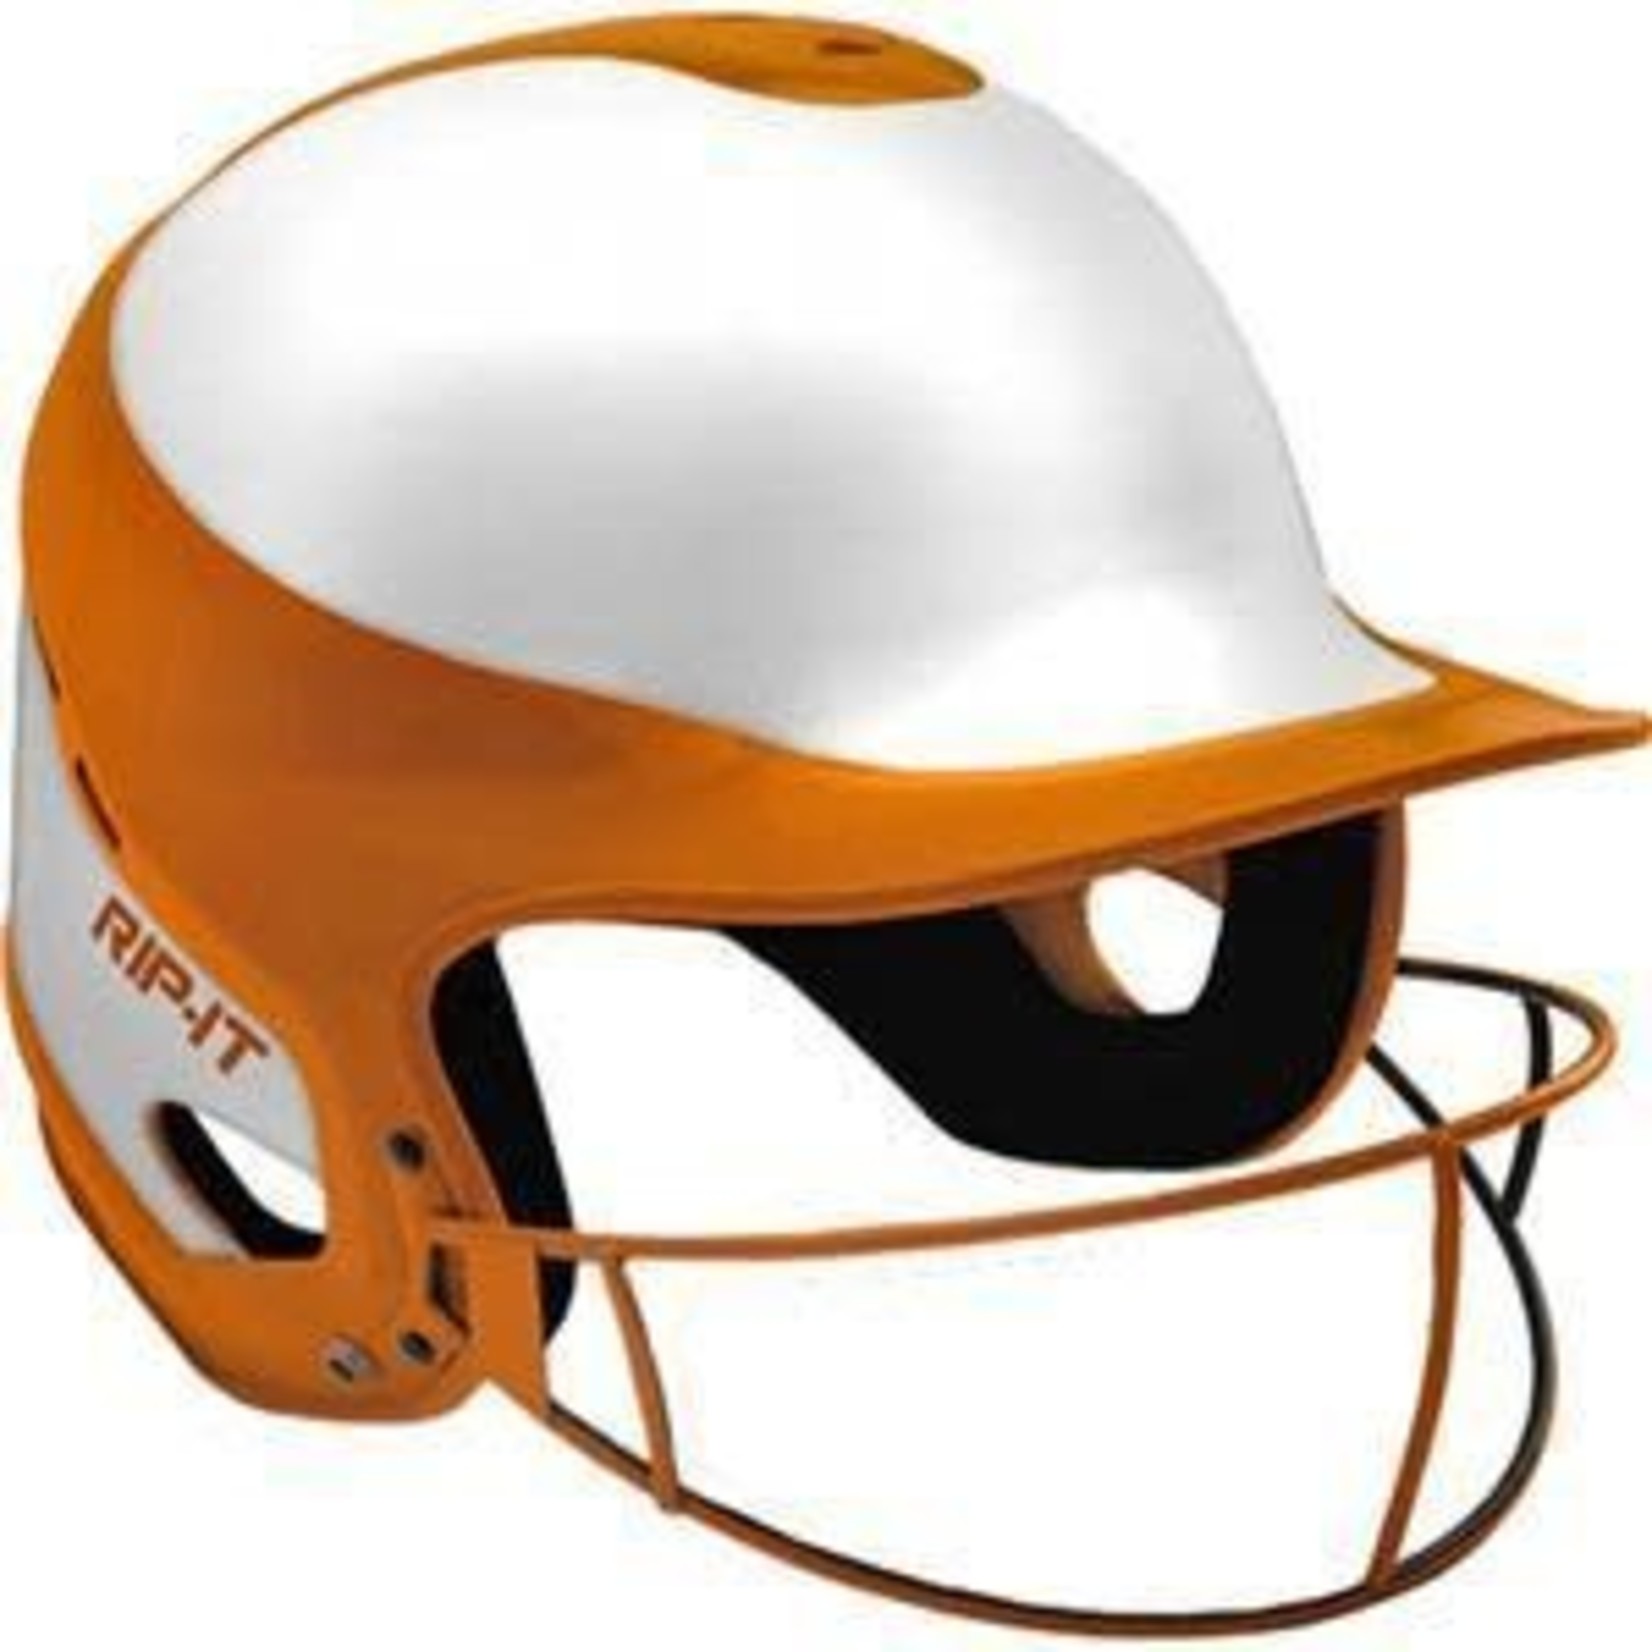 Rip-It Vision Pro Softball Helmet